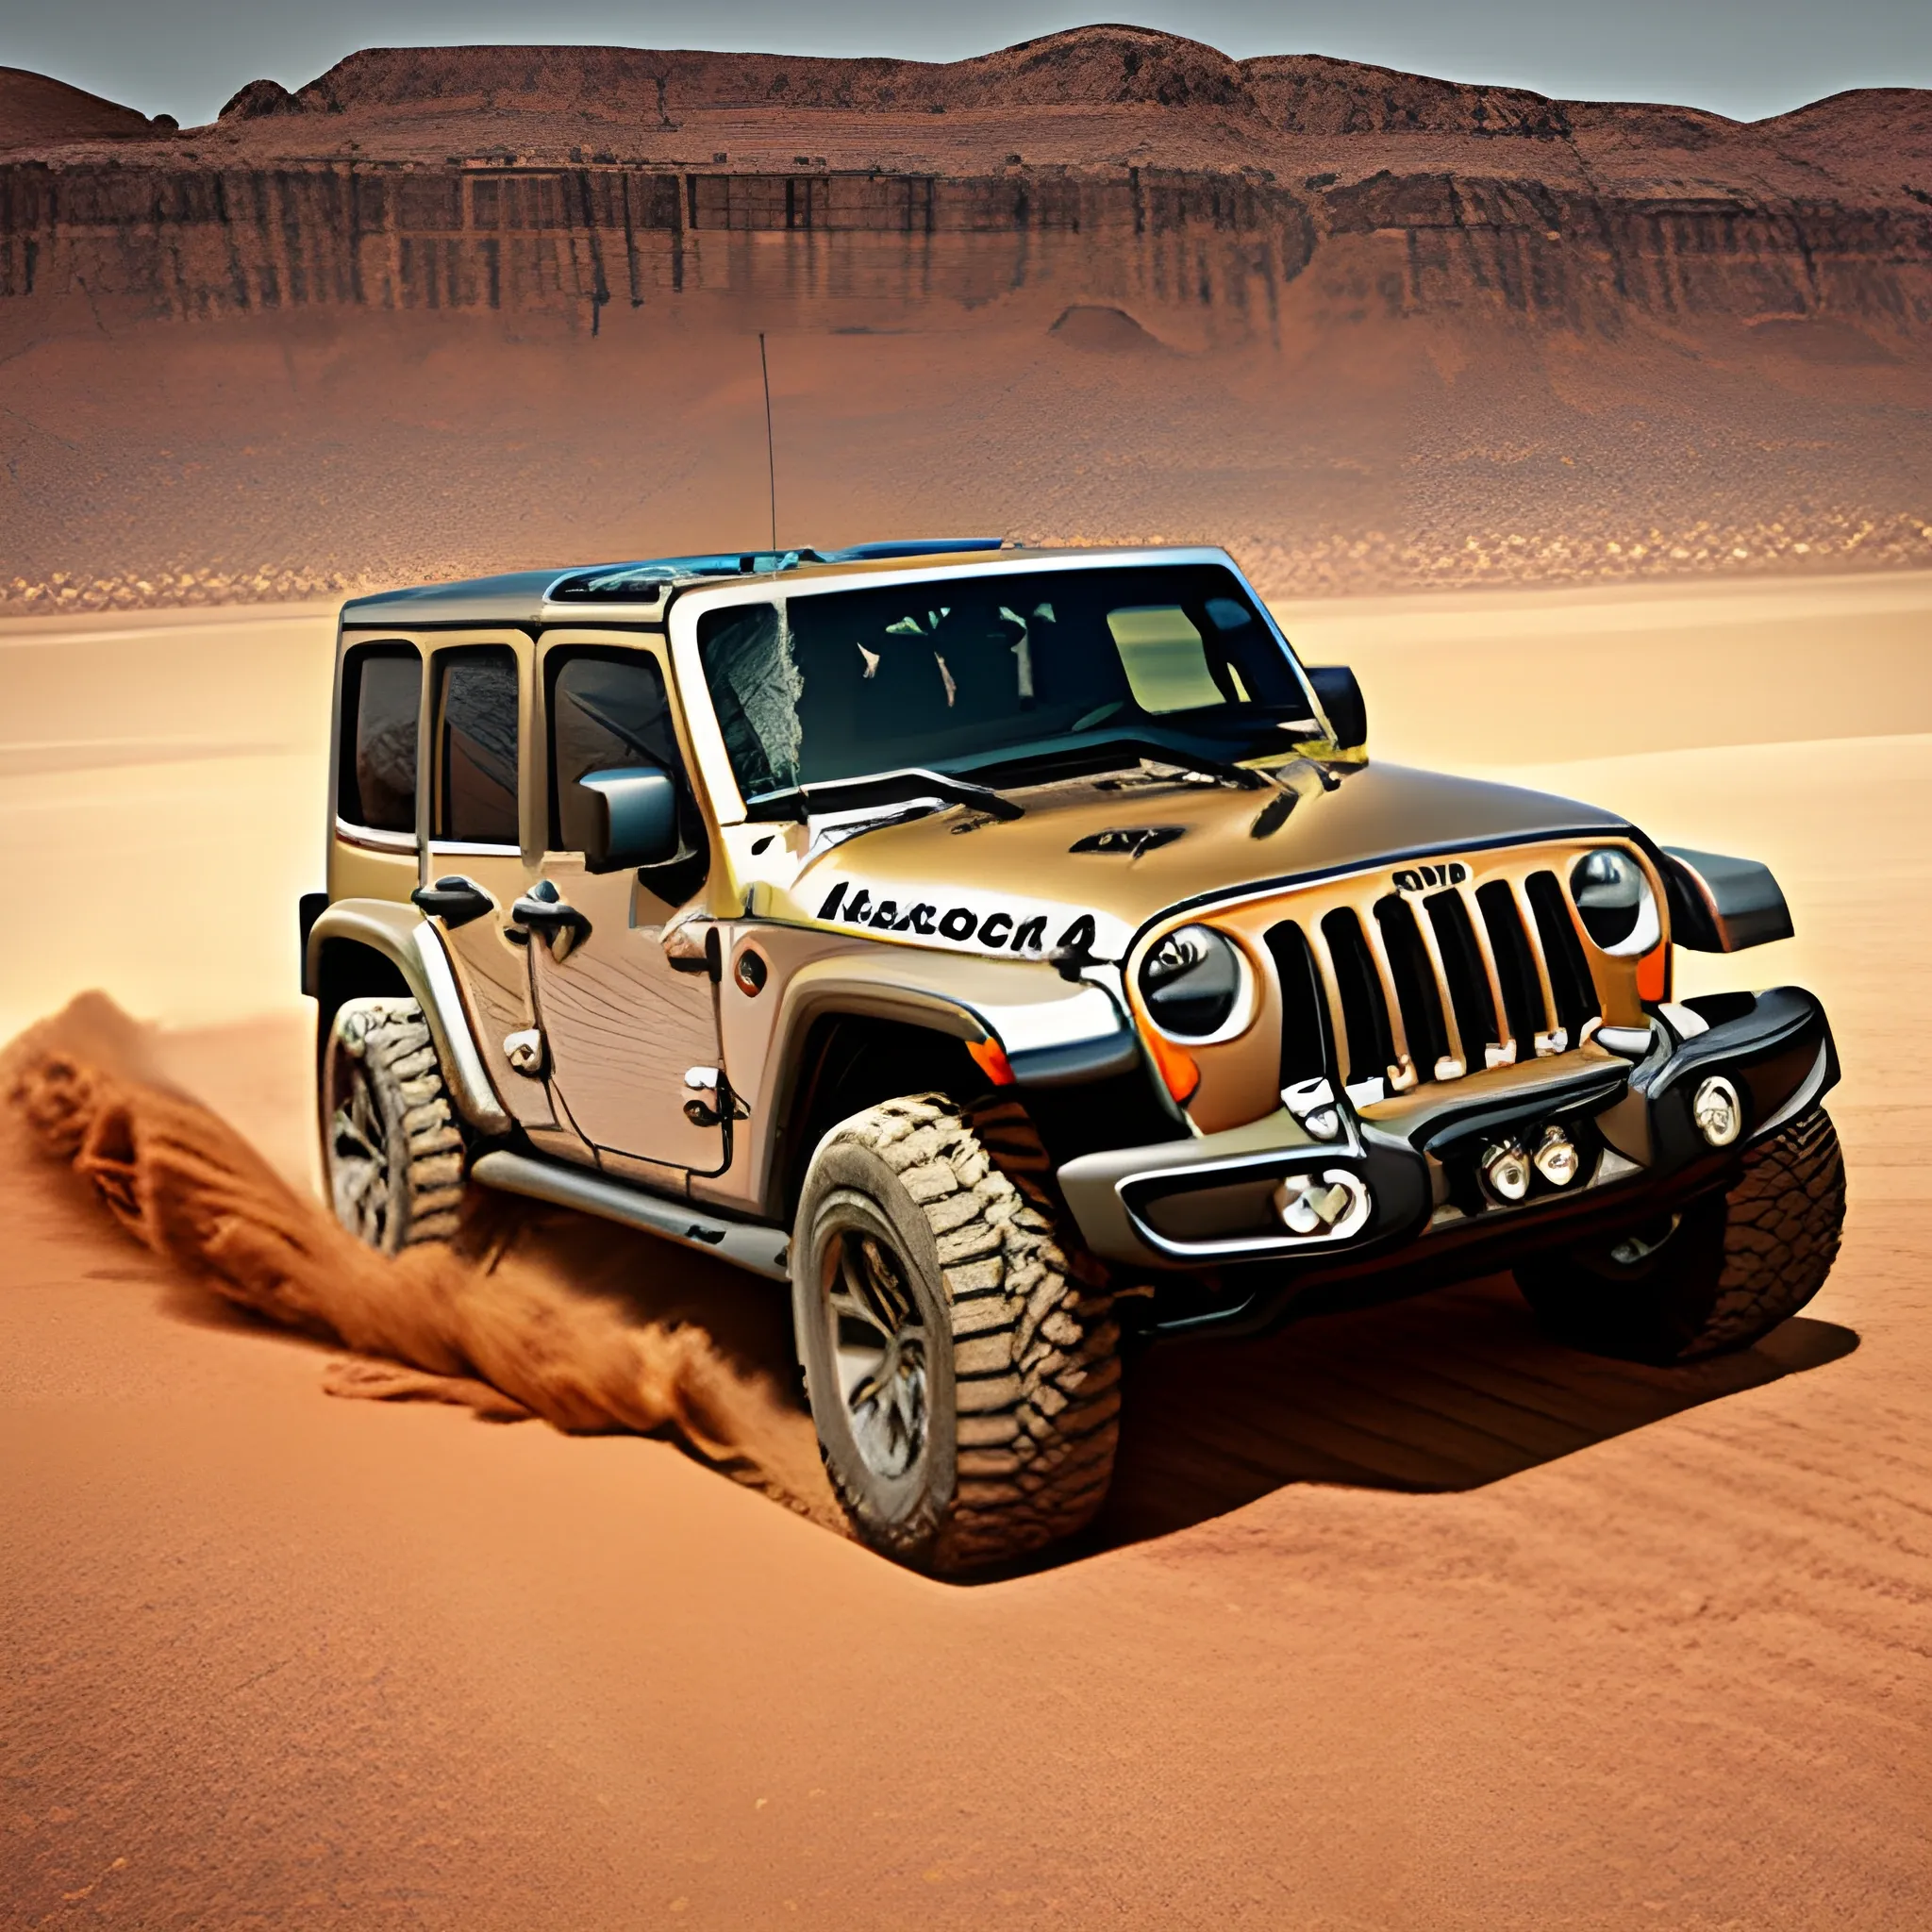 jeep offroad racing in desert
